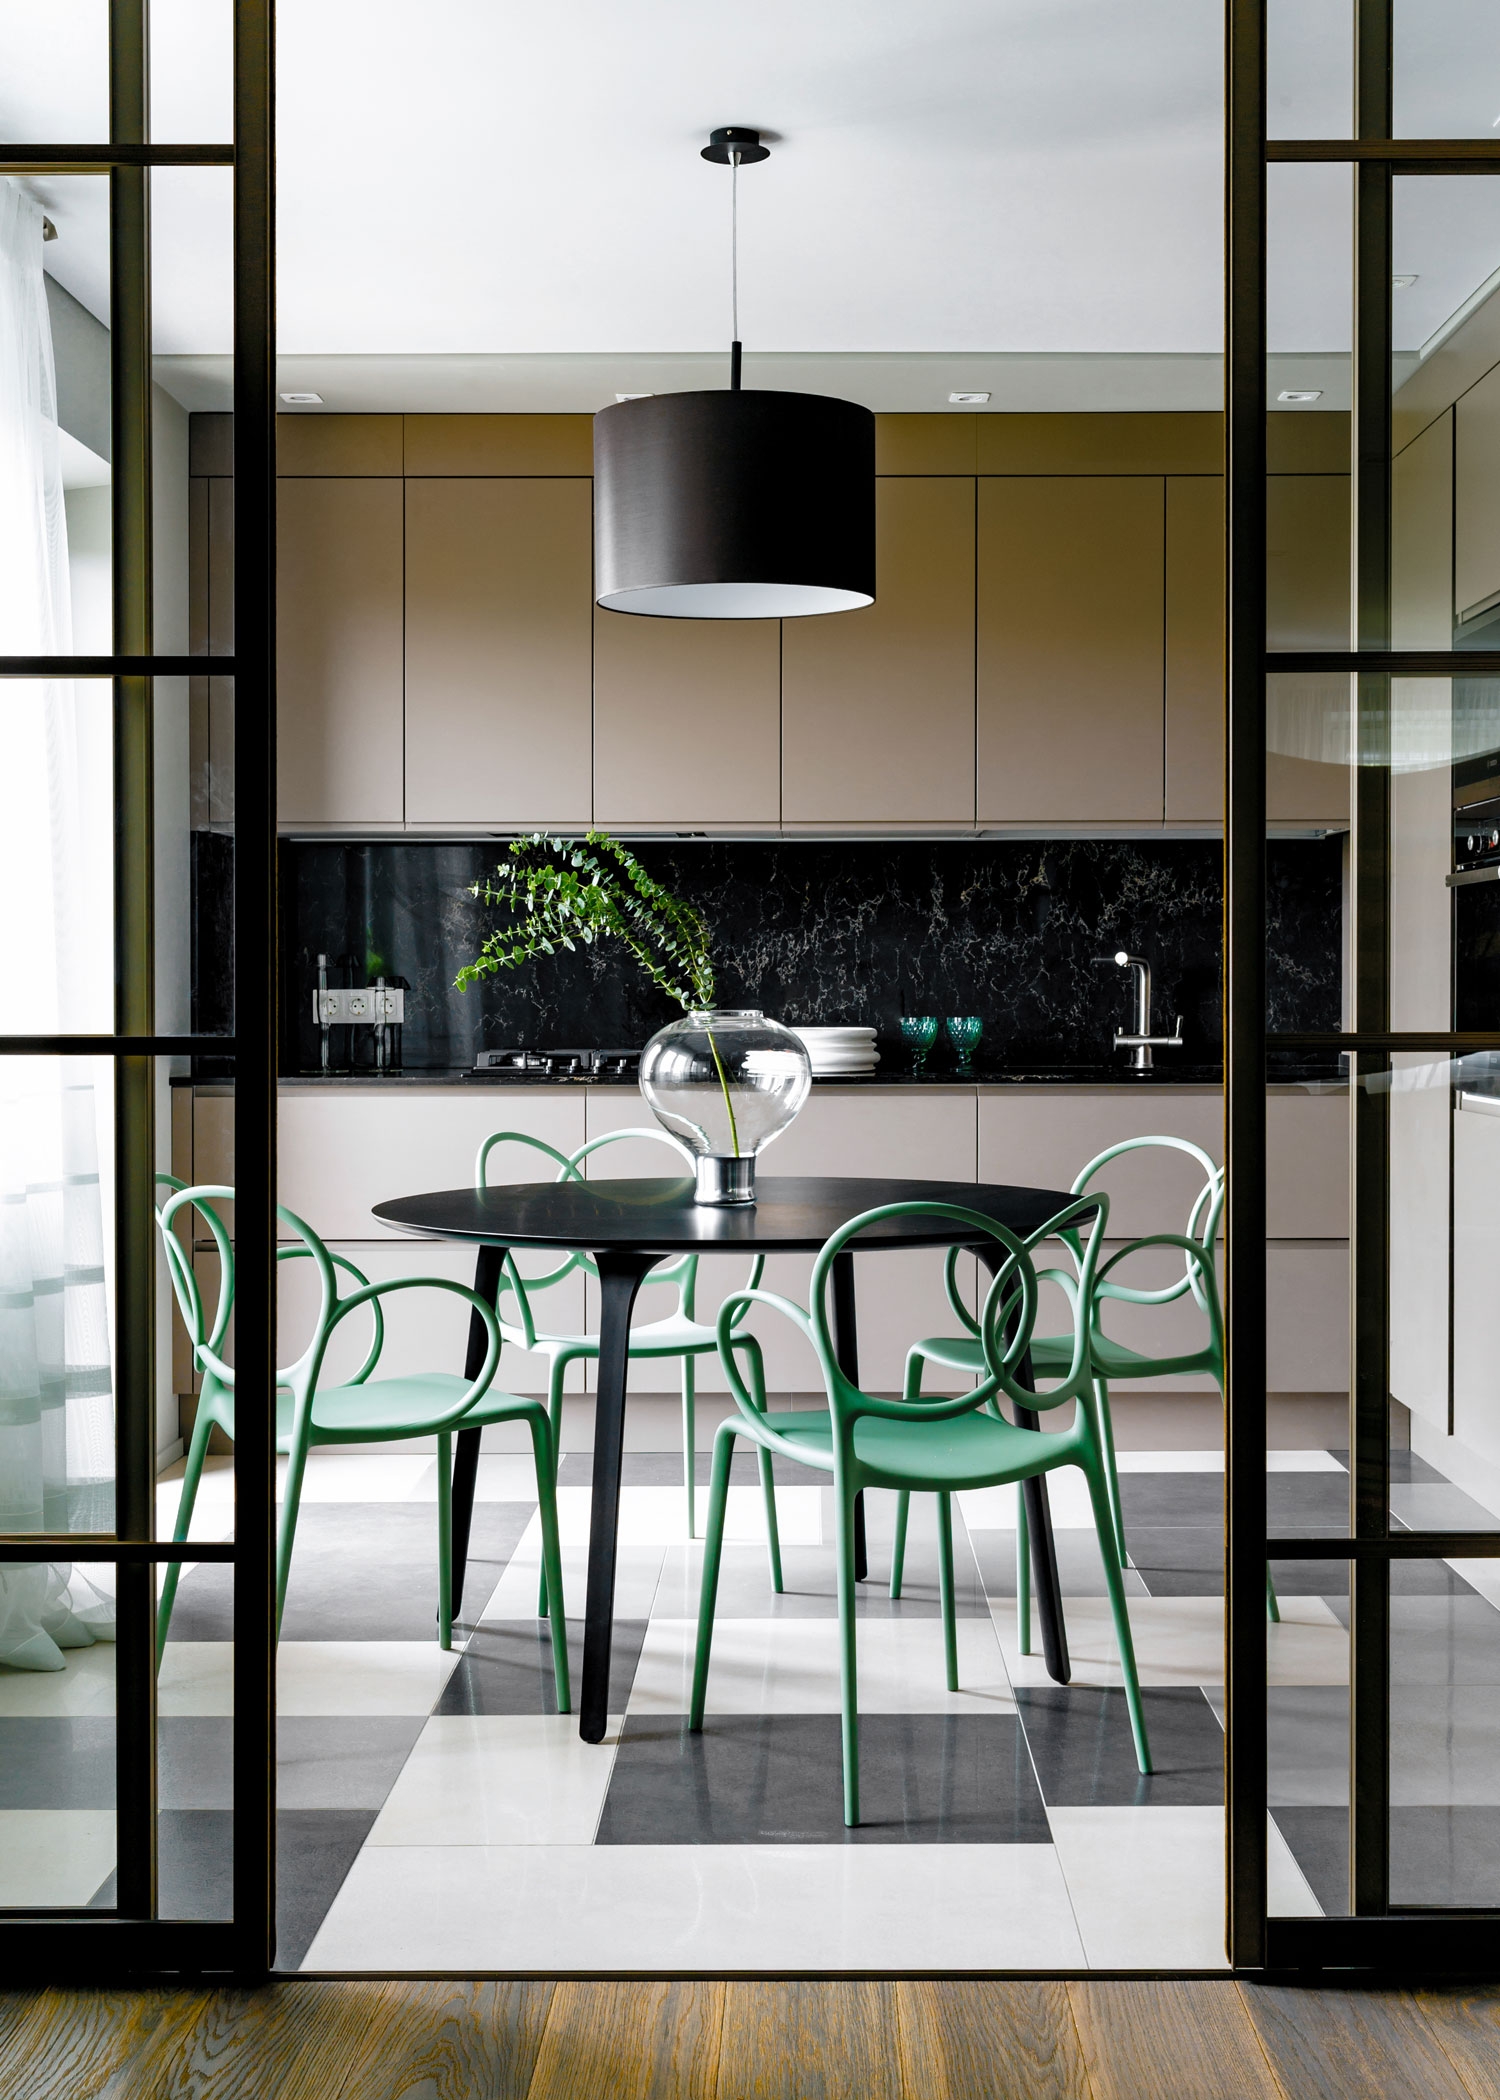 Coastal Pastishe Apartment Kitchen | Atelier Prototipi